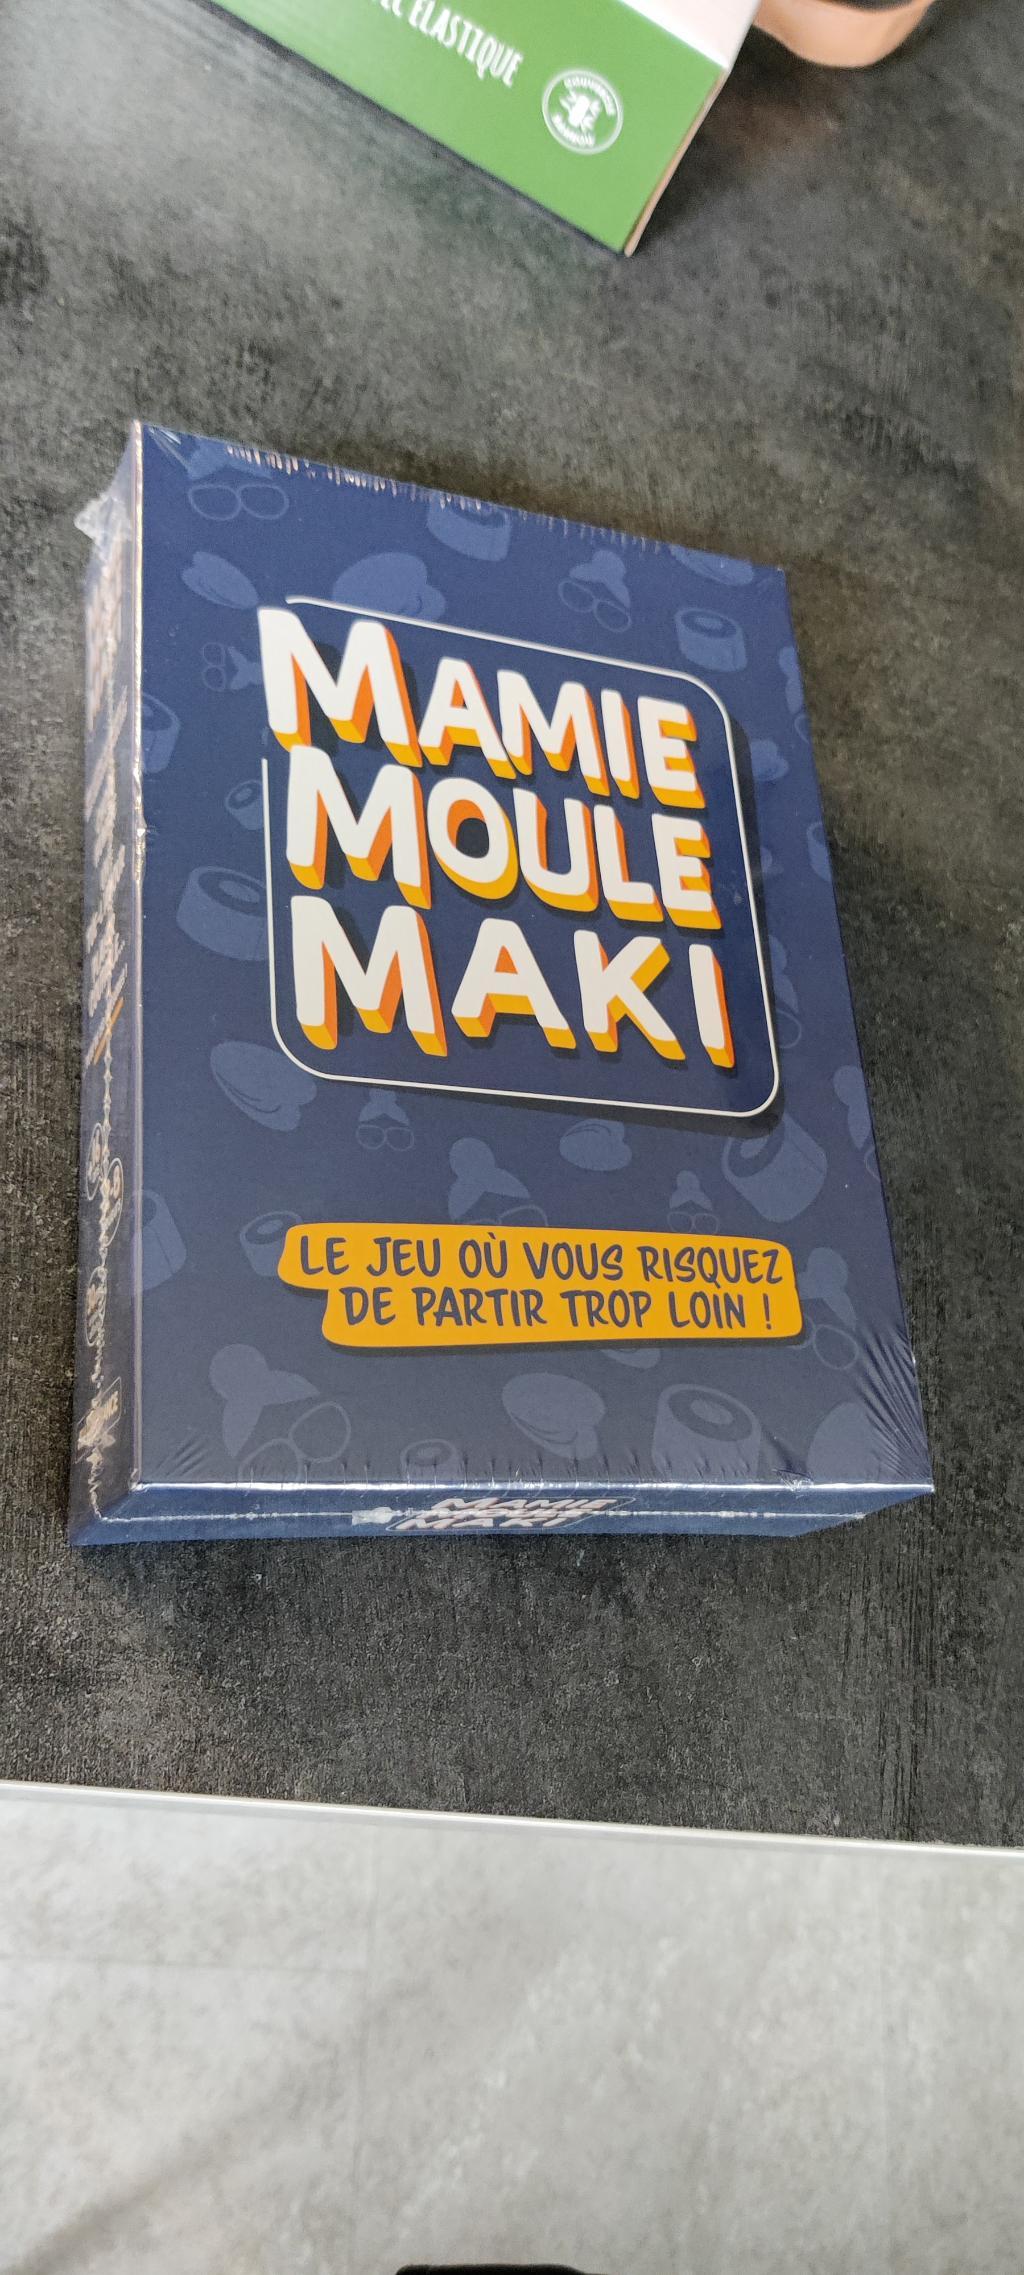 Mamie Moule Maki - Acheter sur Okkazeo